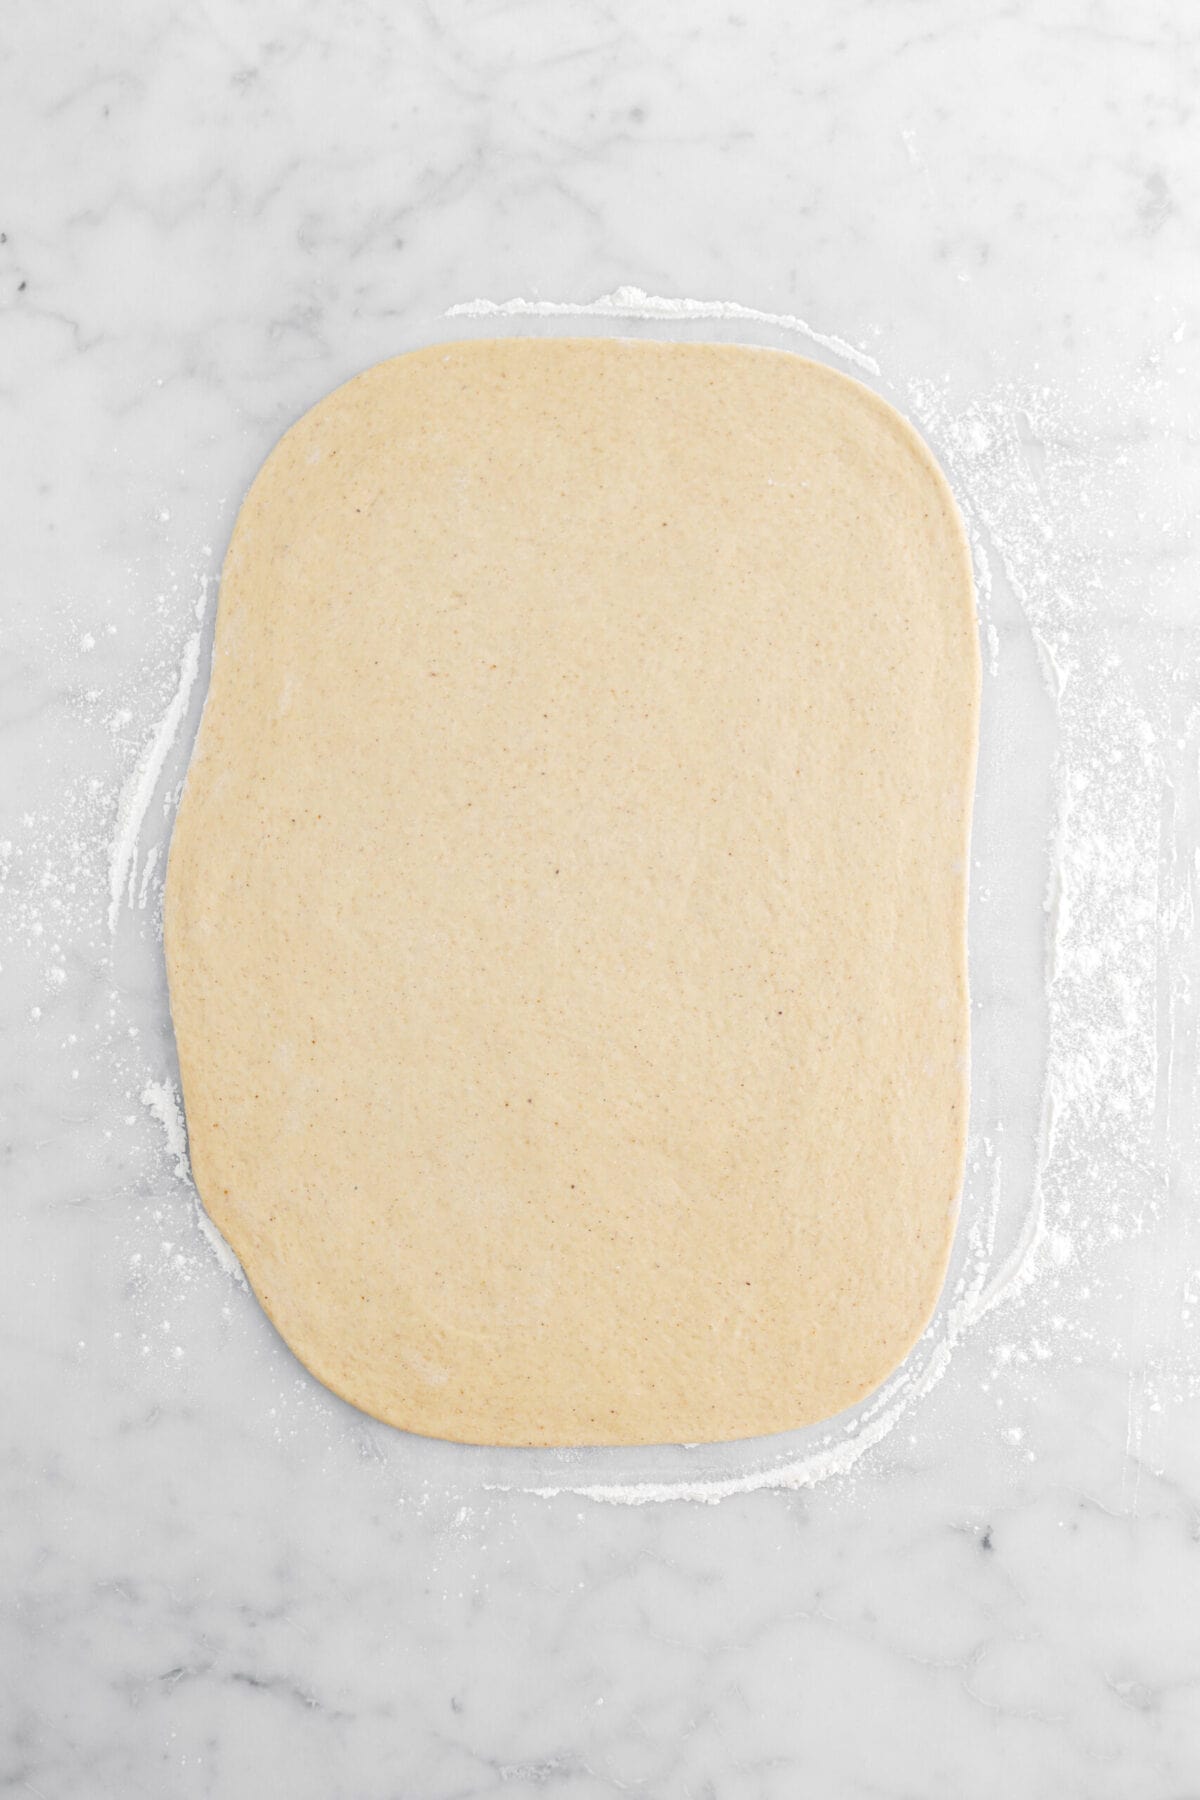 dough rolled in rectangular shape.